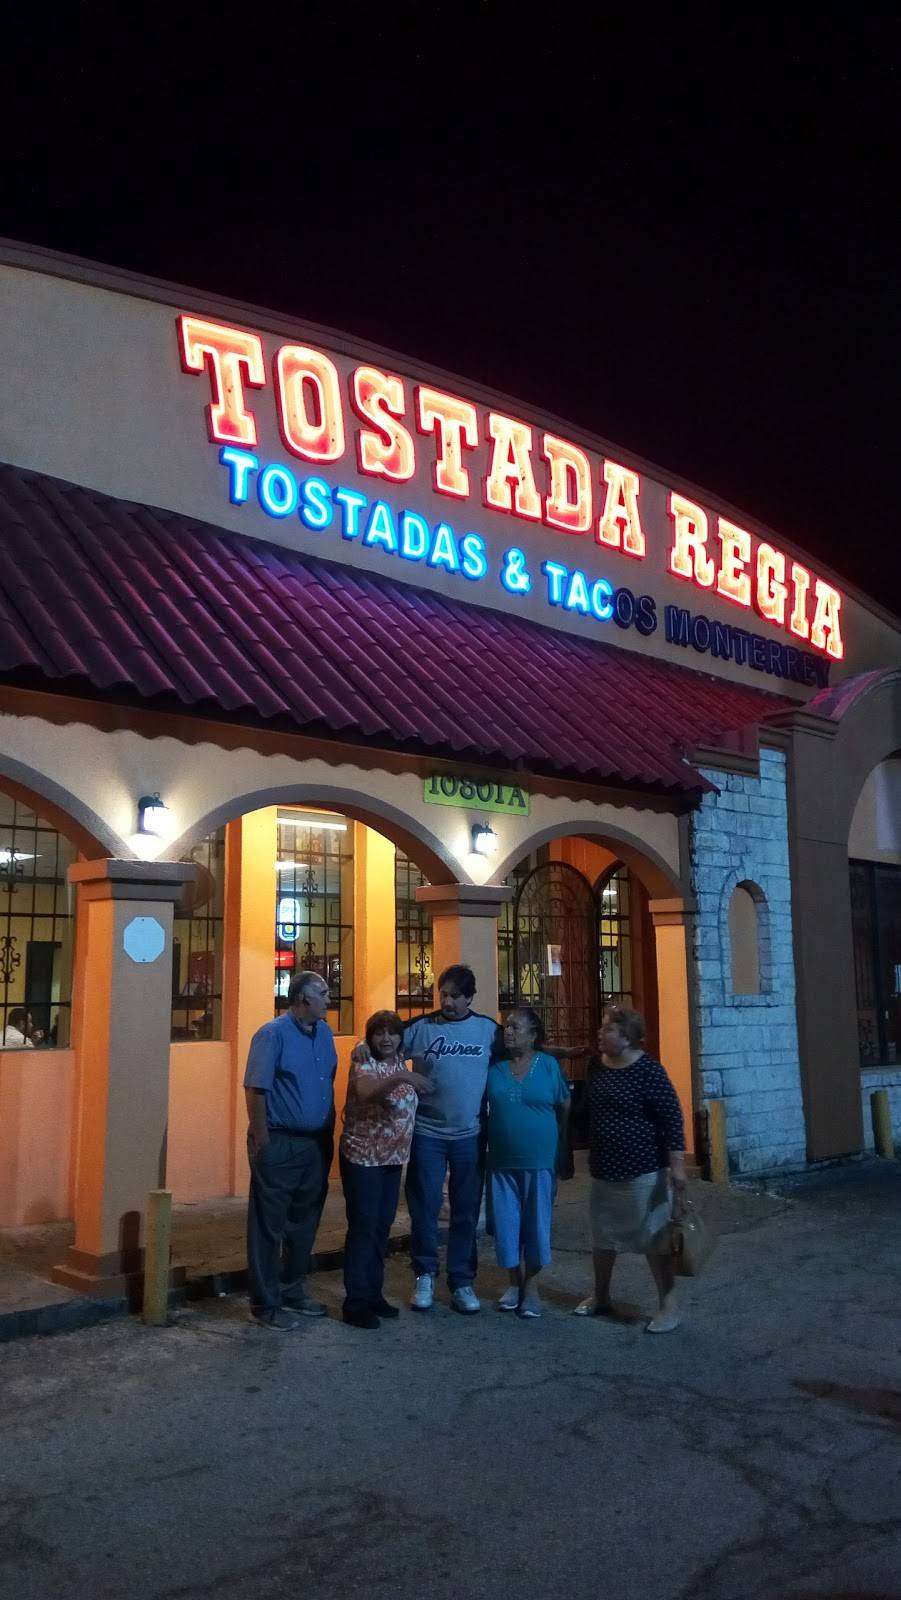 Tostada Regia I10 East Restaurant 10801 East Fwy, Houston, TX